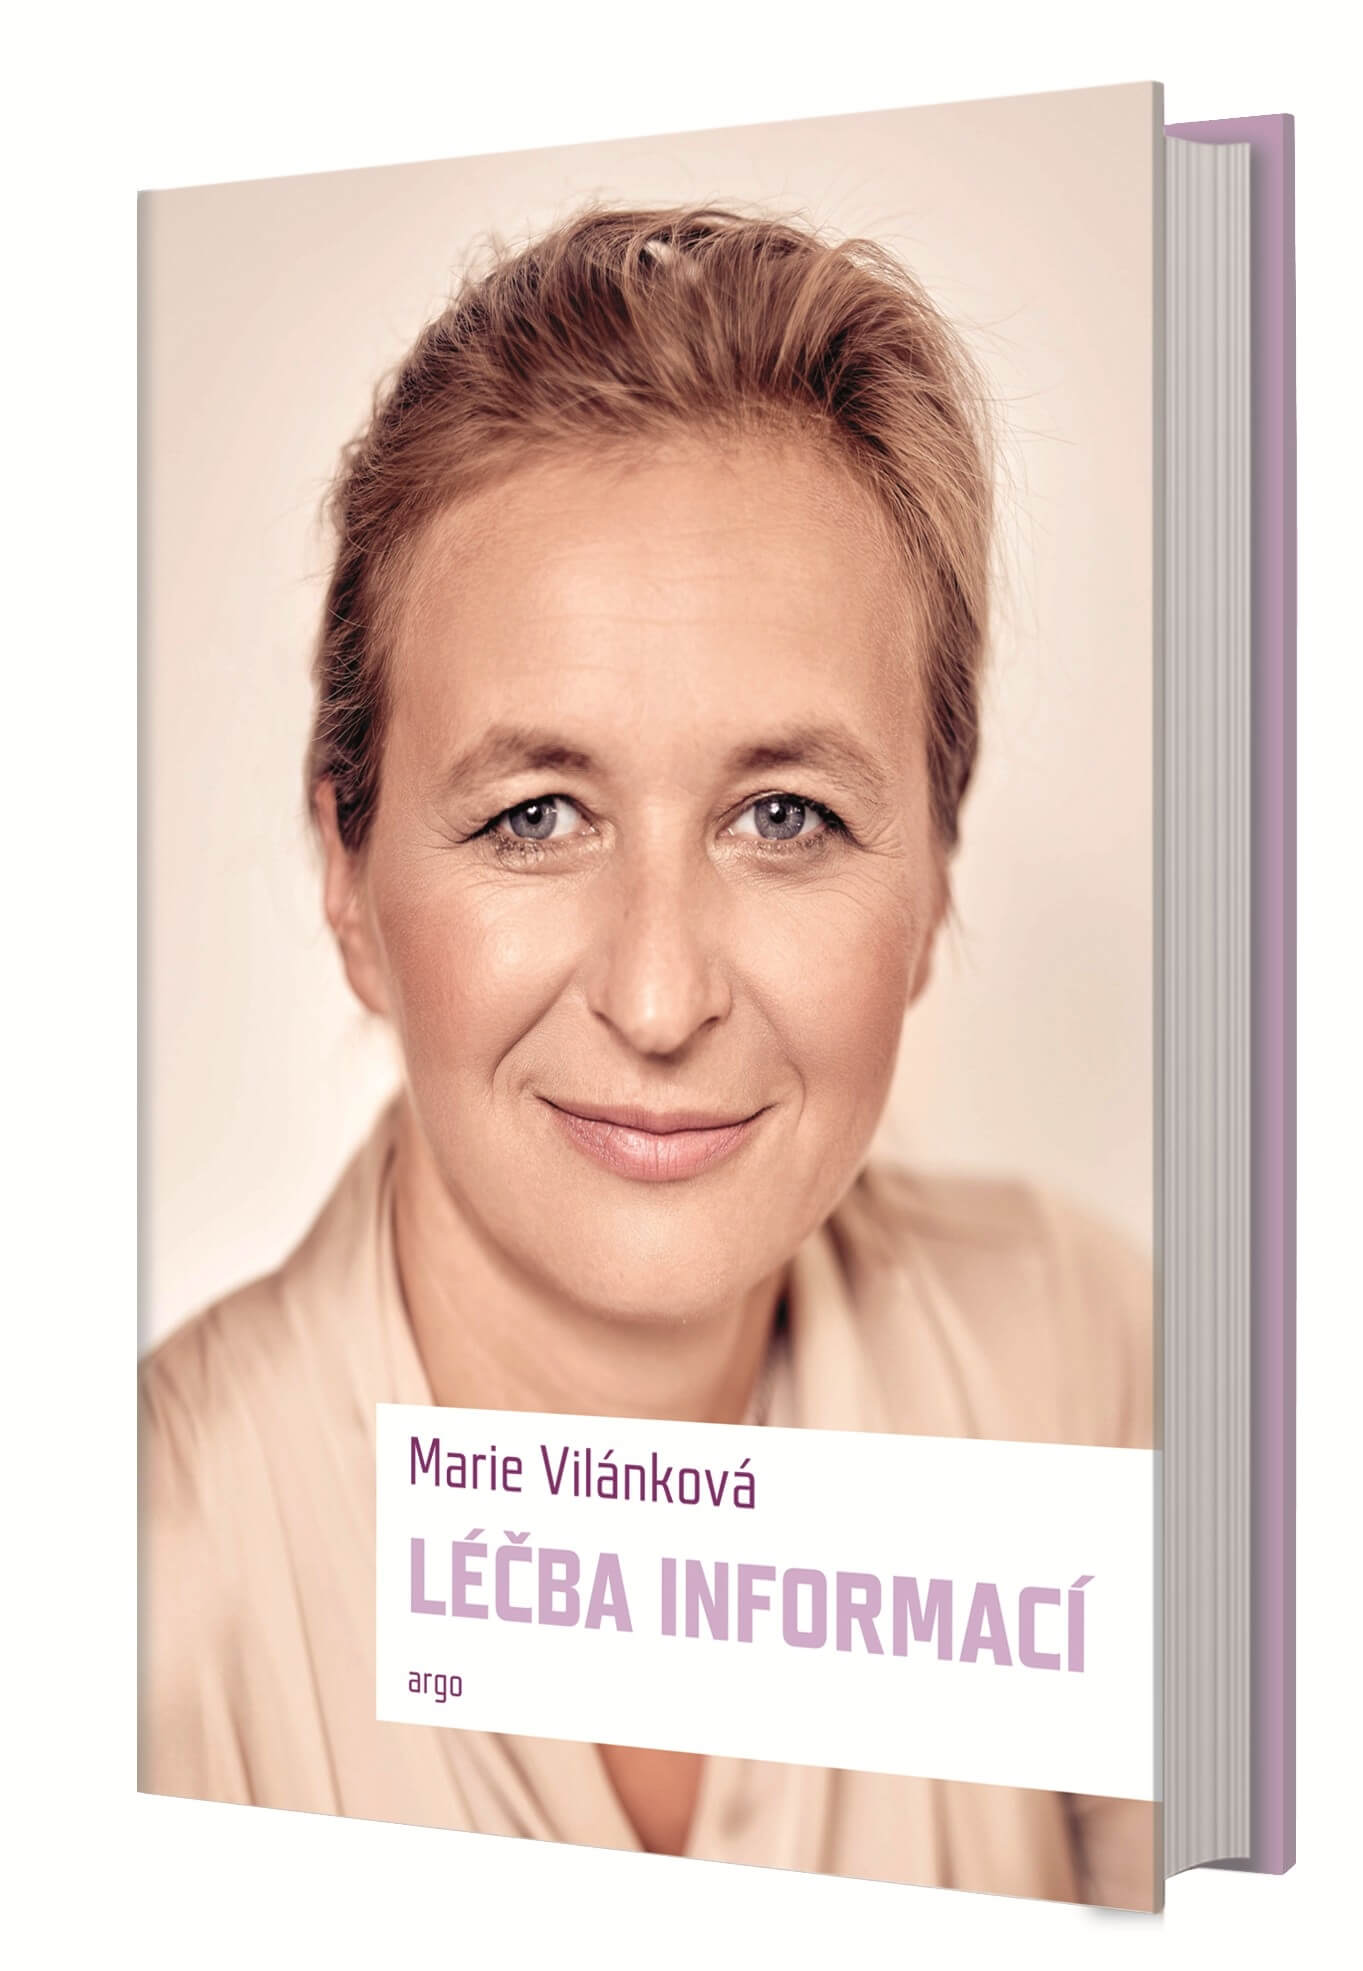 Knihy Léčba informací (Marie Vilánková) + 2 mesiace na vrátenie tovaru